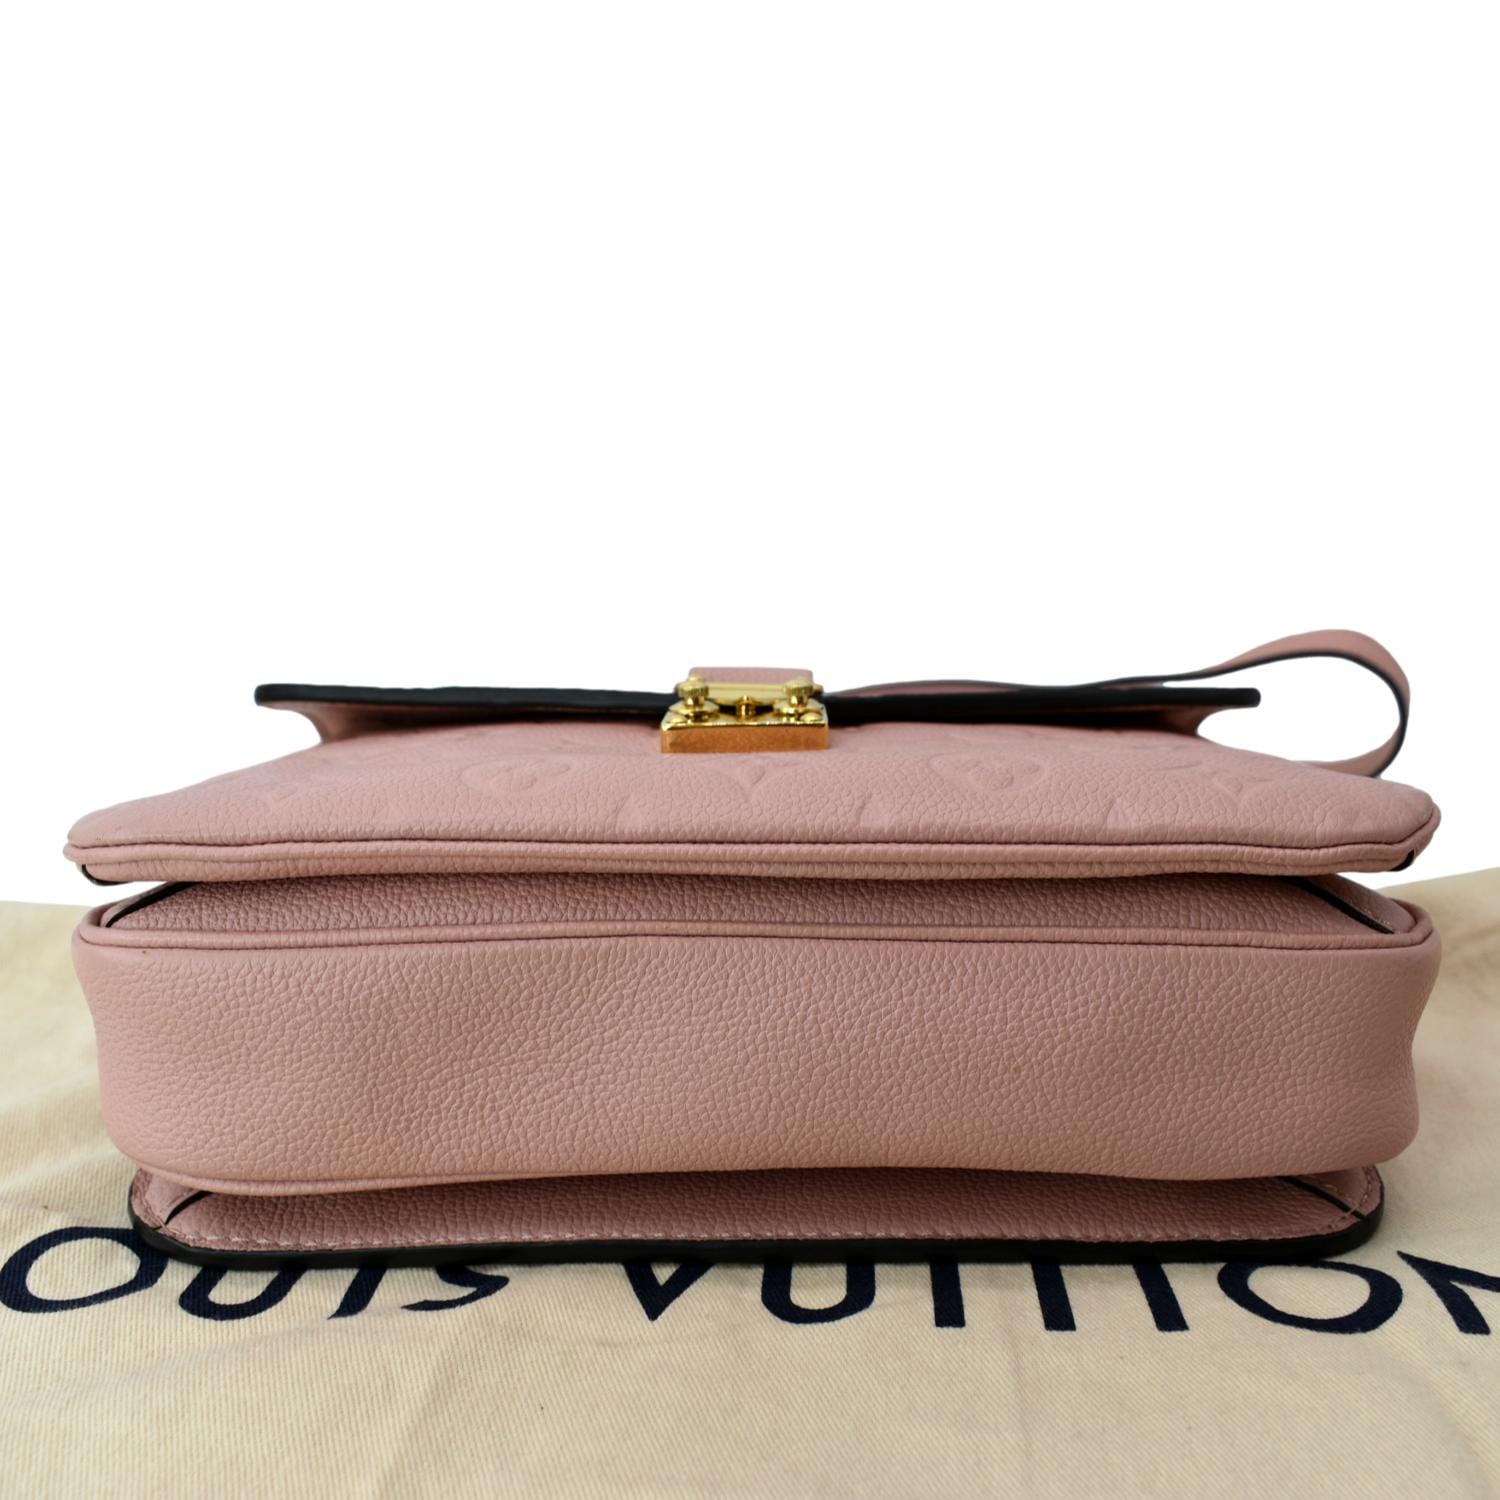 Louis Vuitton - Pochette Métis - Empreinte Leather - Pink - Brand New